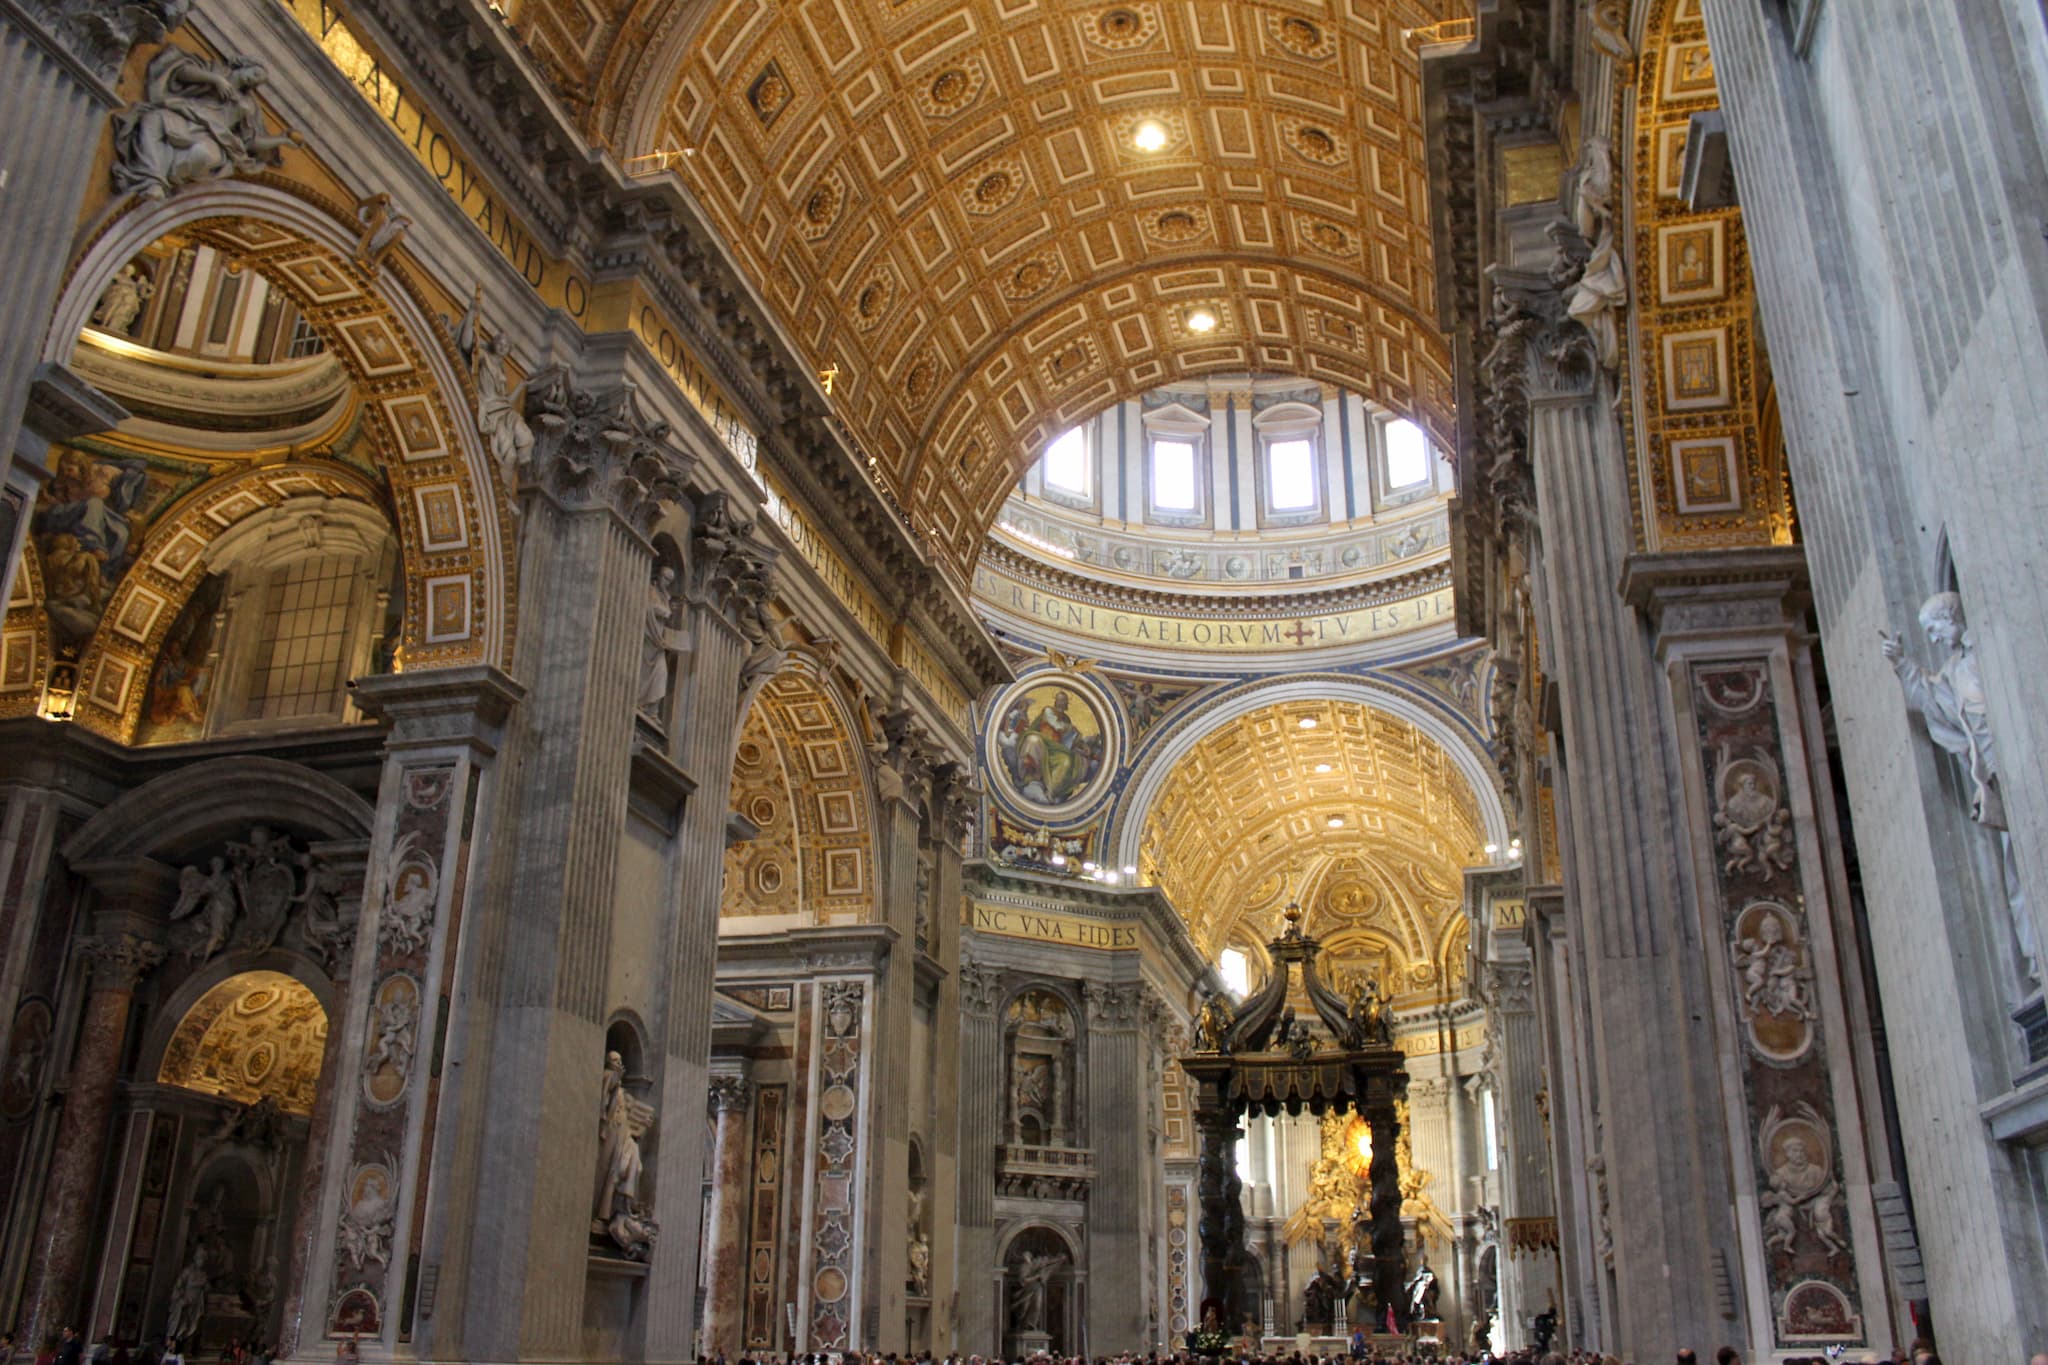 Inside of St. Peter's basilica